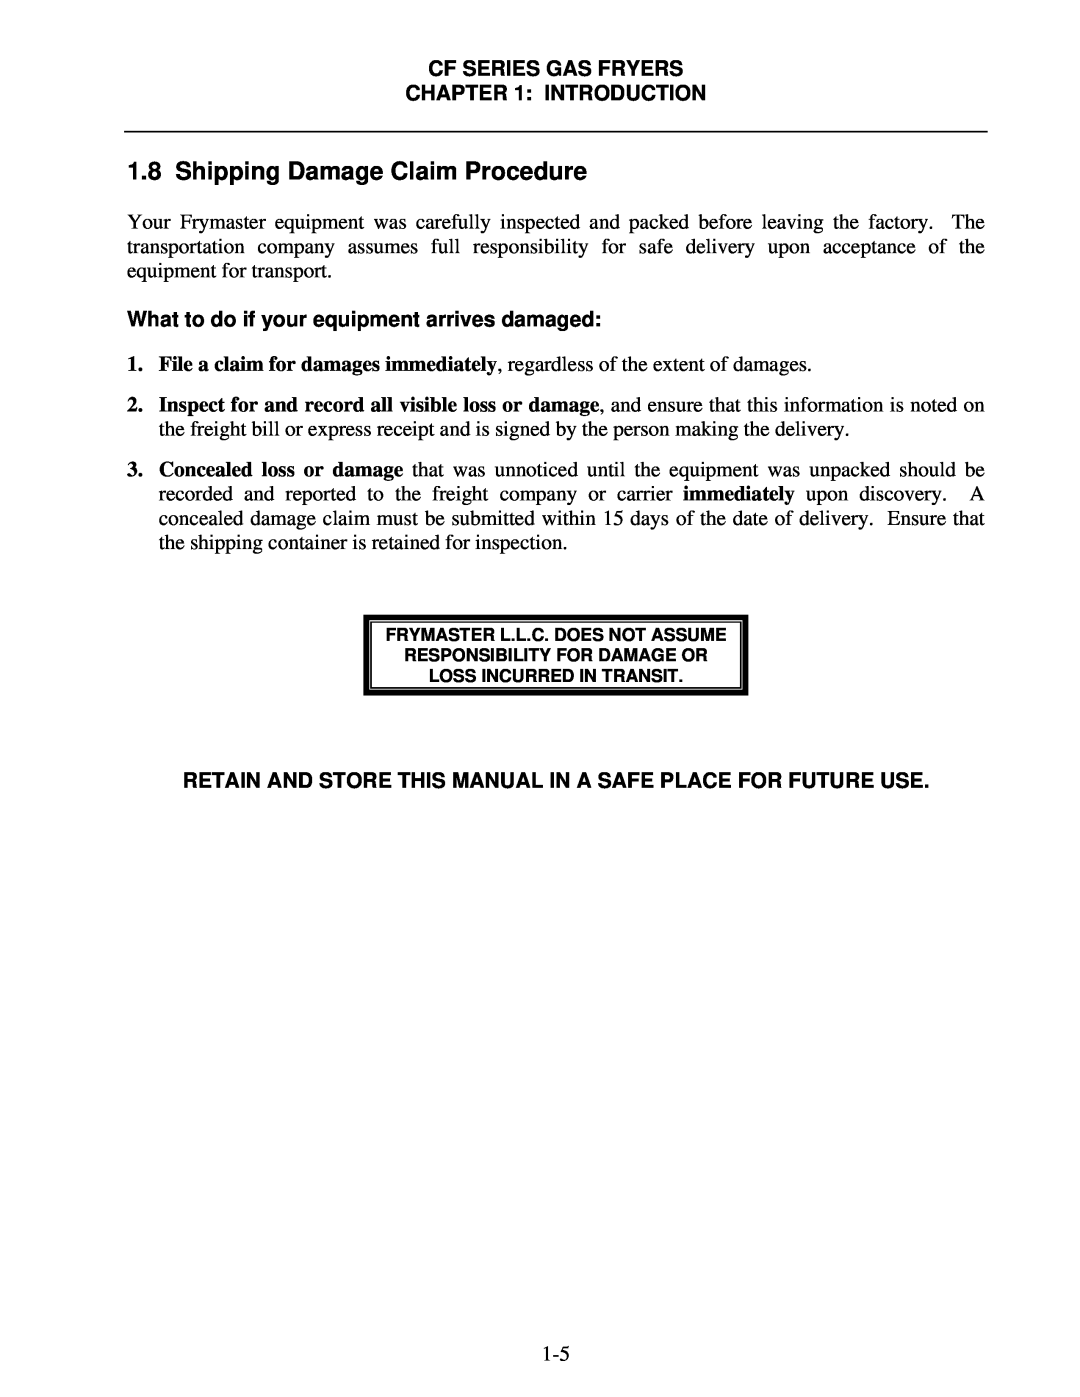 Frymaster CF Series operation manual Shipping Damage Claim Procedure 